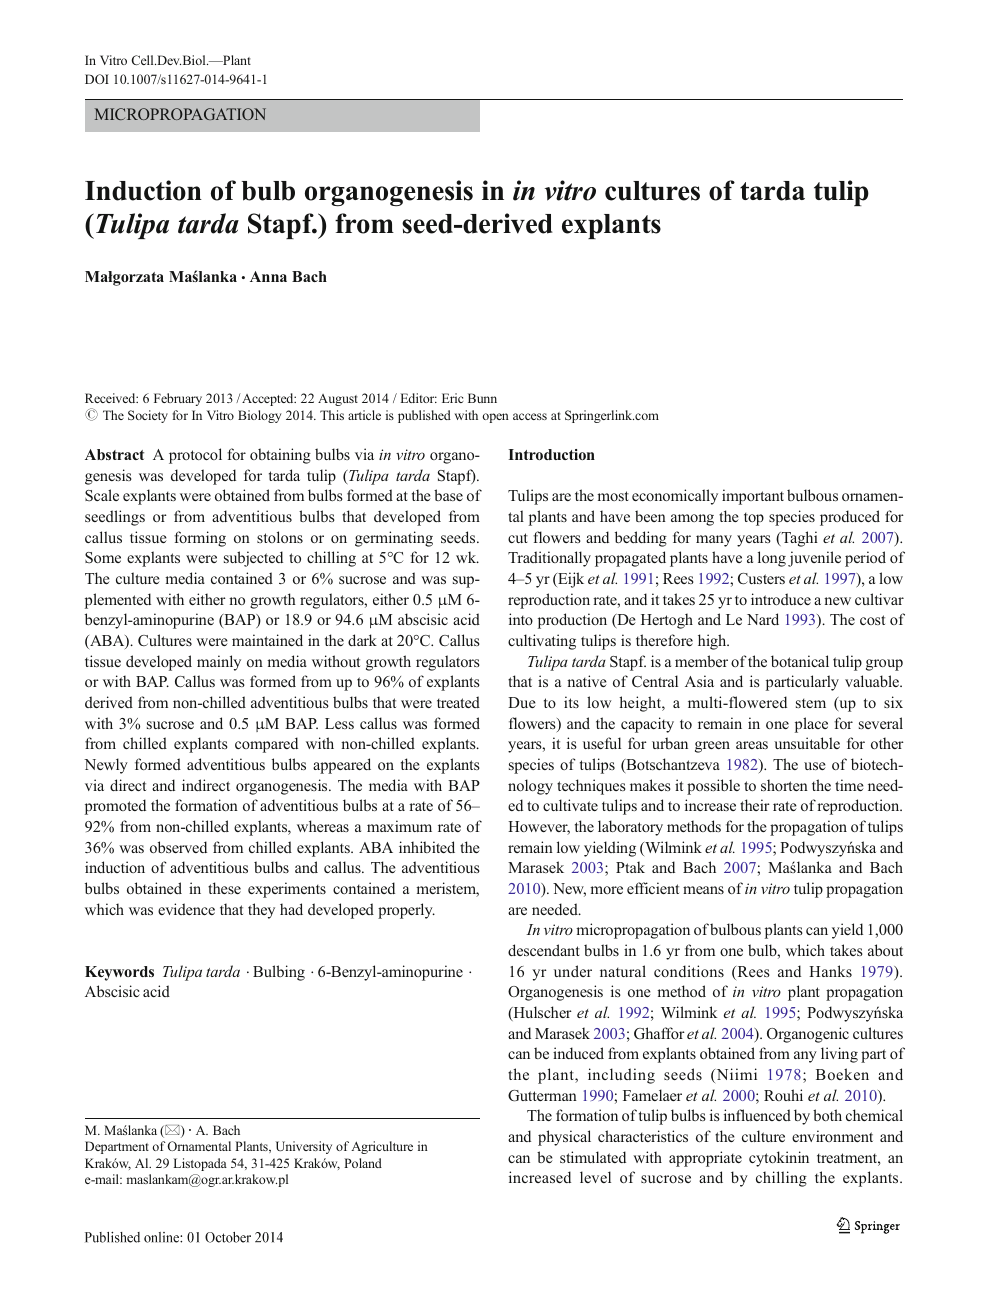 Induction of bulb organogenesis in in vitro cultures of tarda